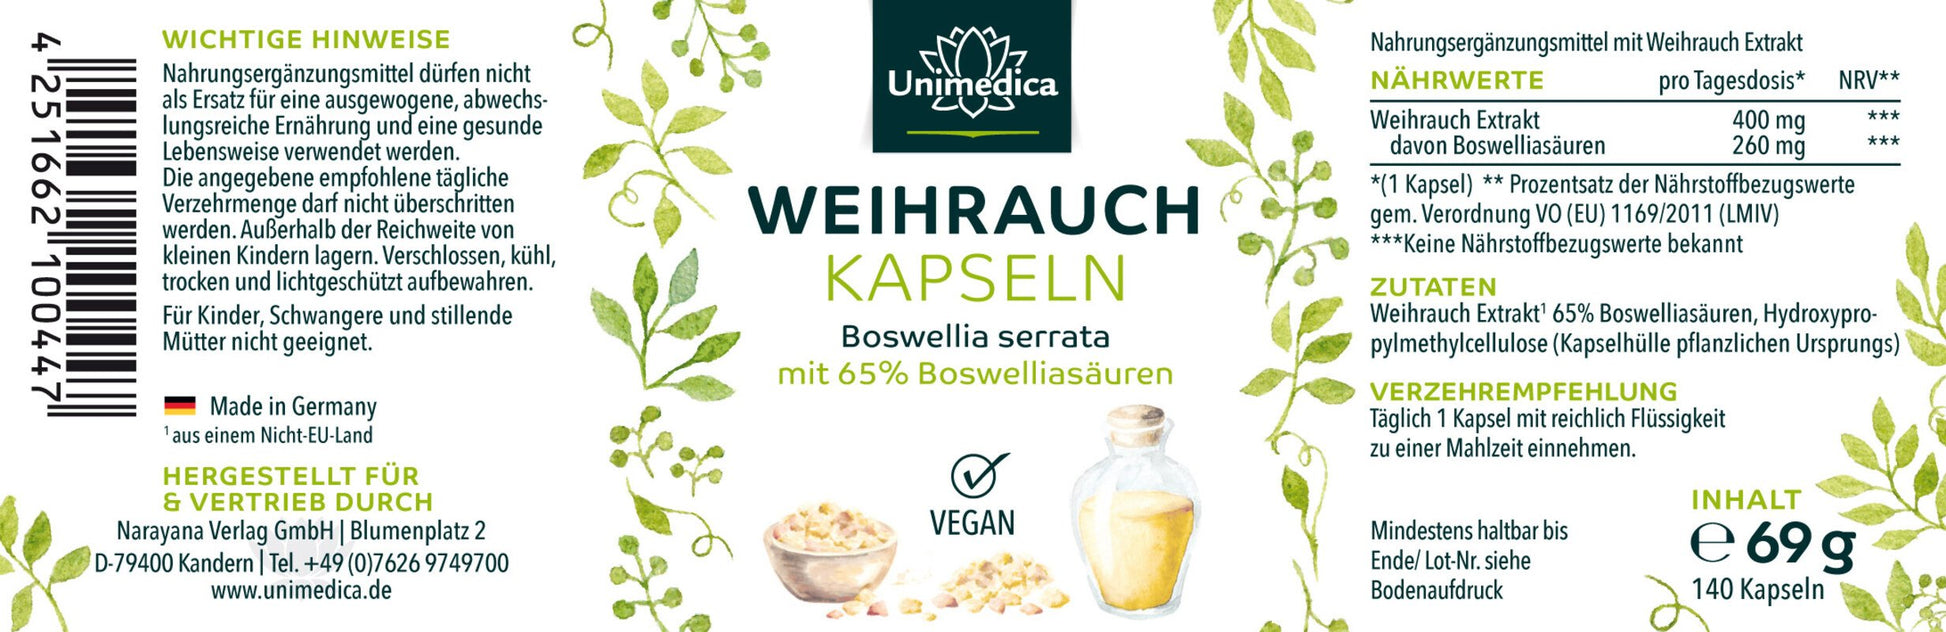 Weihrauch - Boswellia serrata - 400 mg pro Tagesdosis (1 Kapsel) -  Etikett